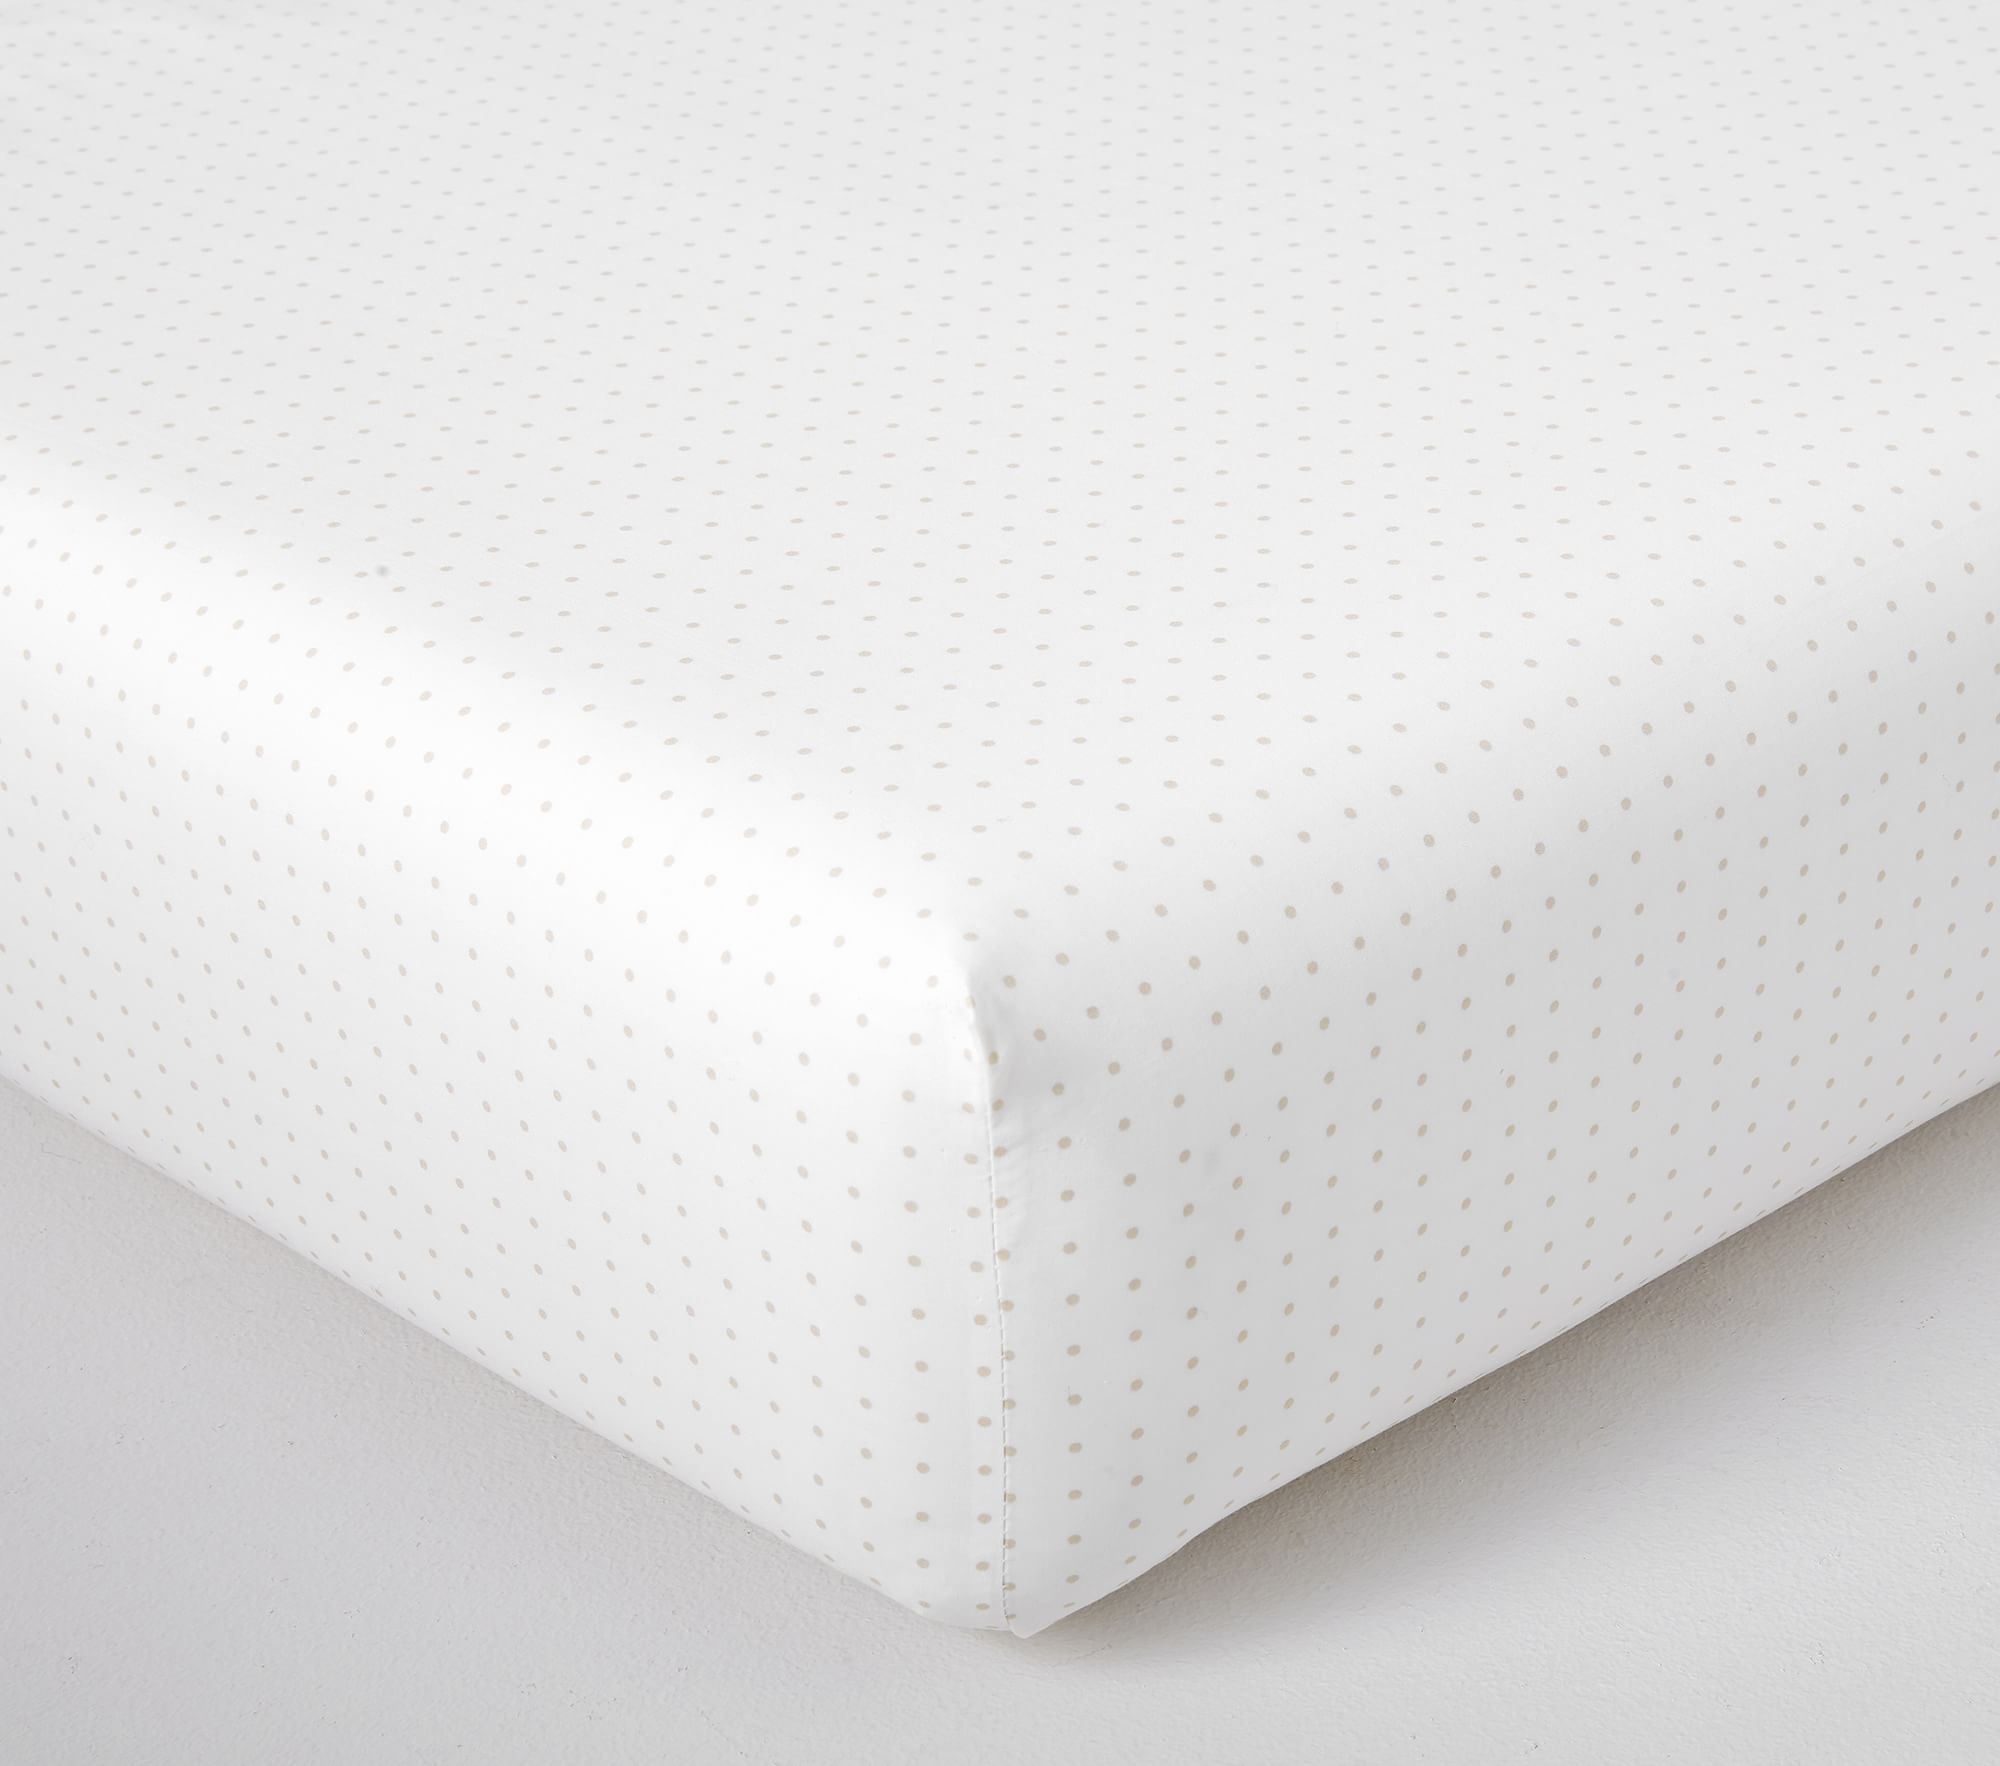 Organic Sweet Dot Crib Fitted Sheet, Ivory/Oatmeal - Image 0